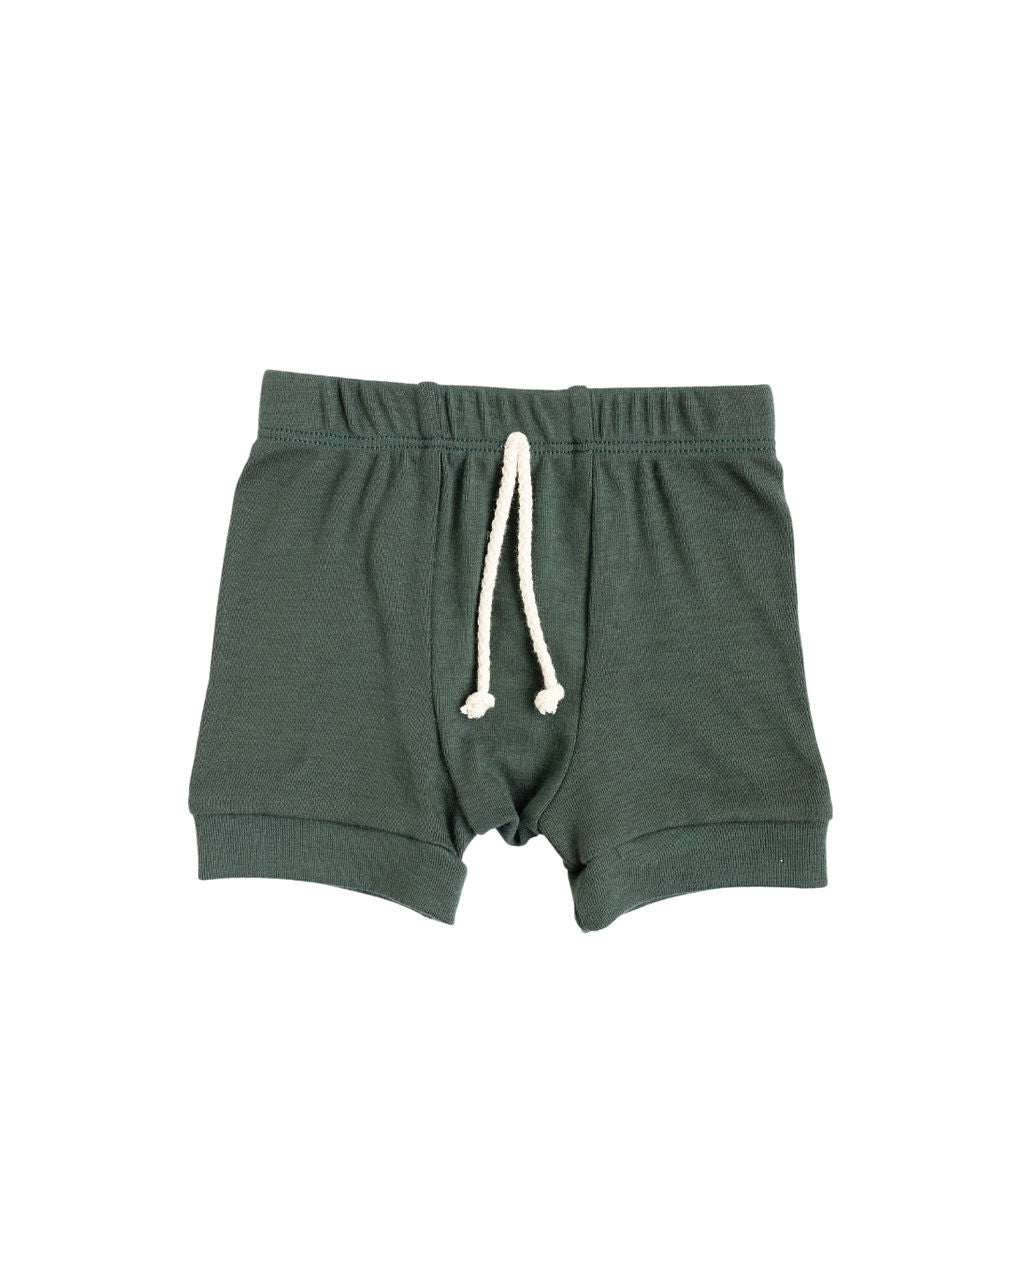 rib knit shorts - deep forest